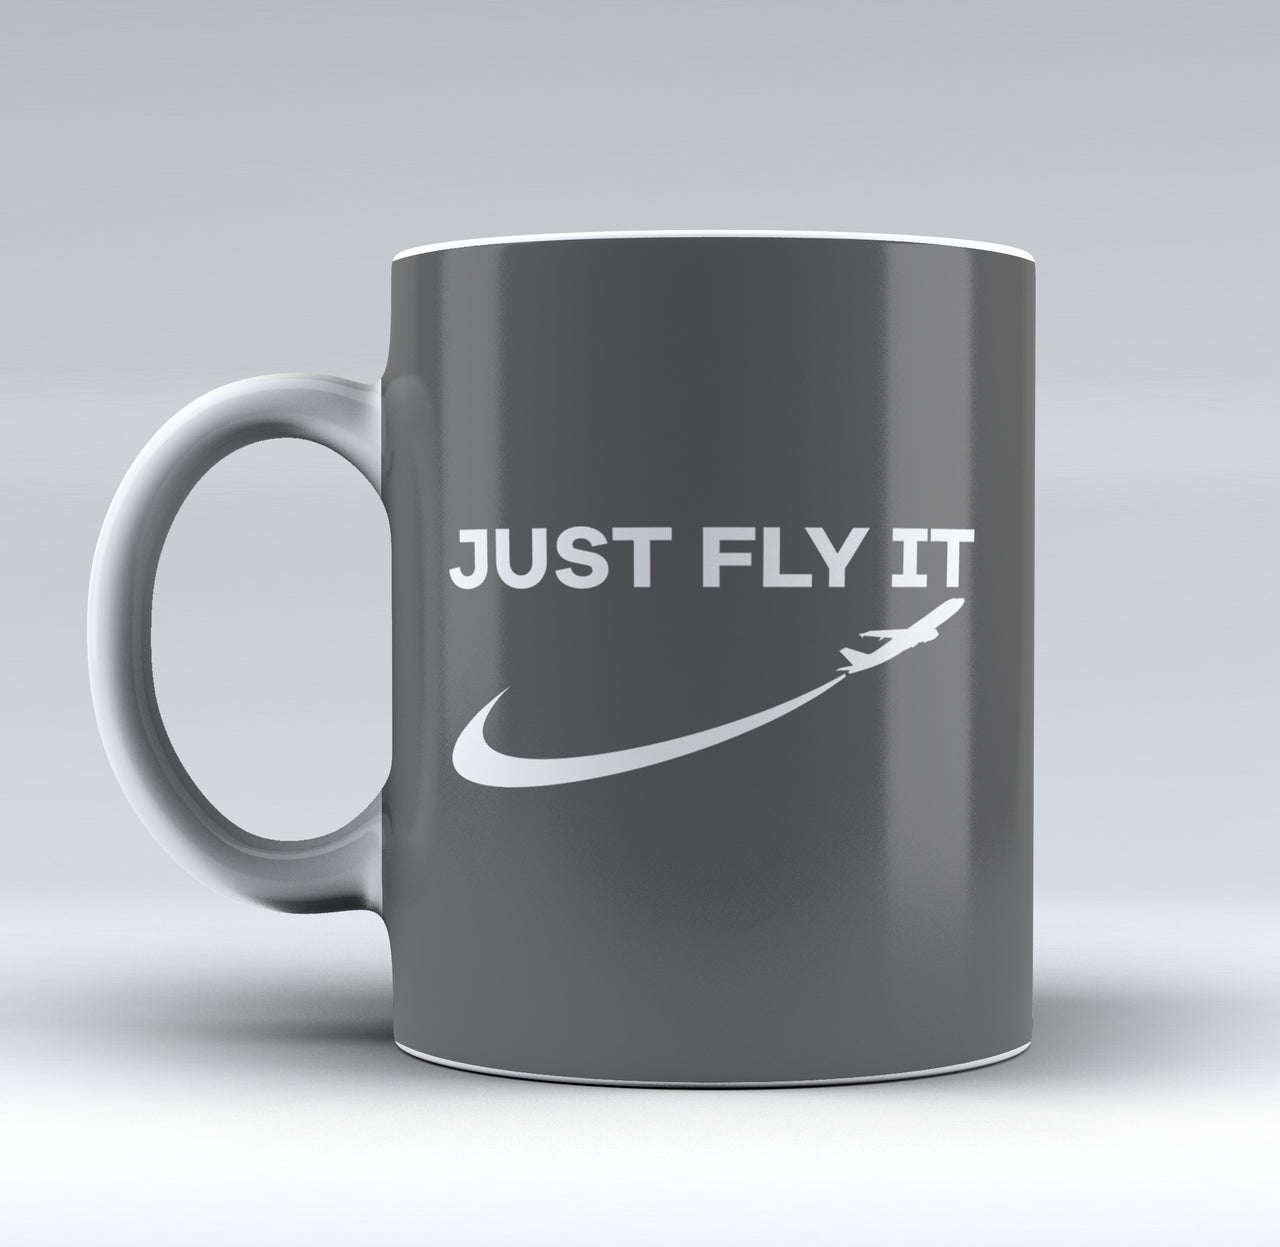 Just Fly It 2 Designed Mugs